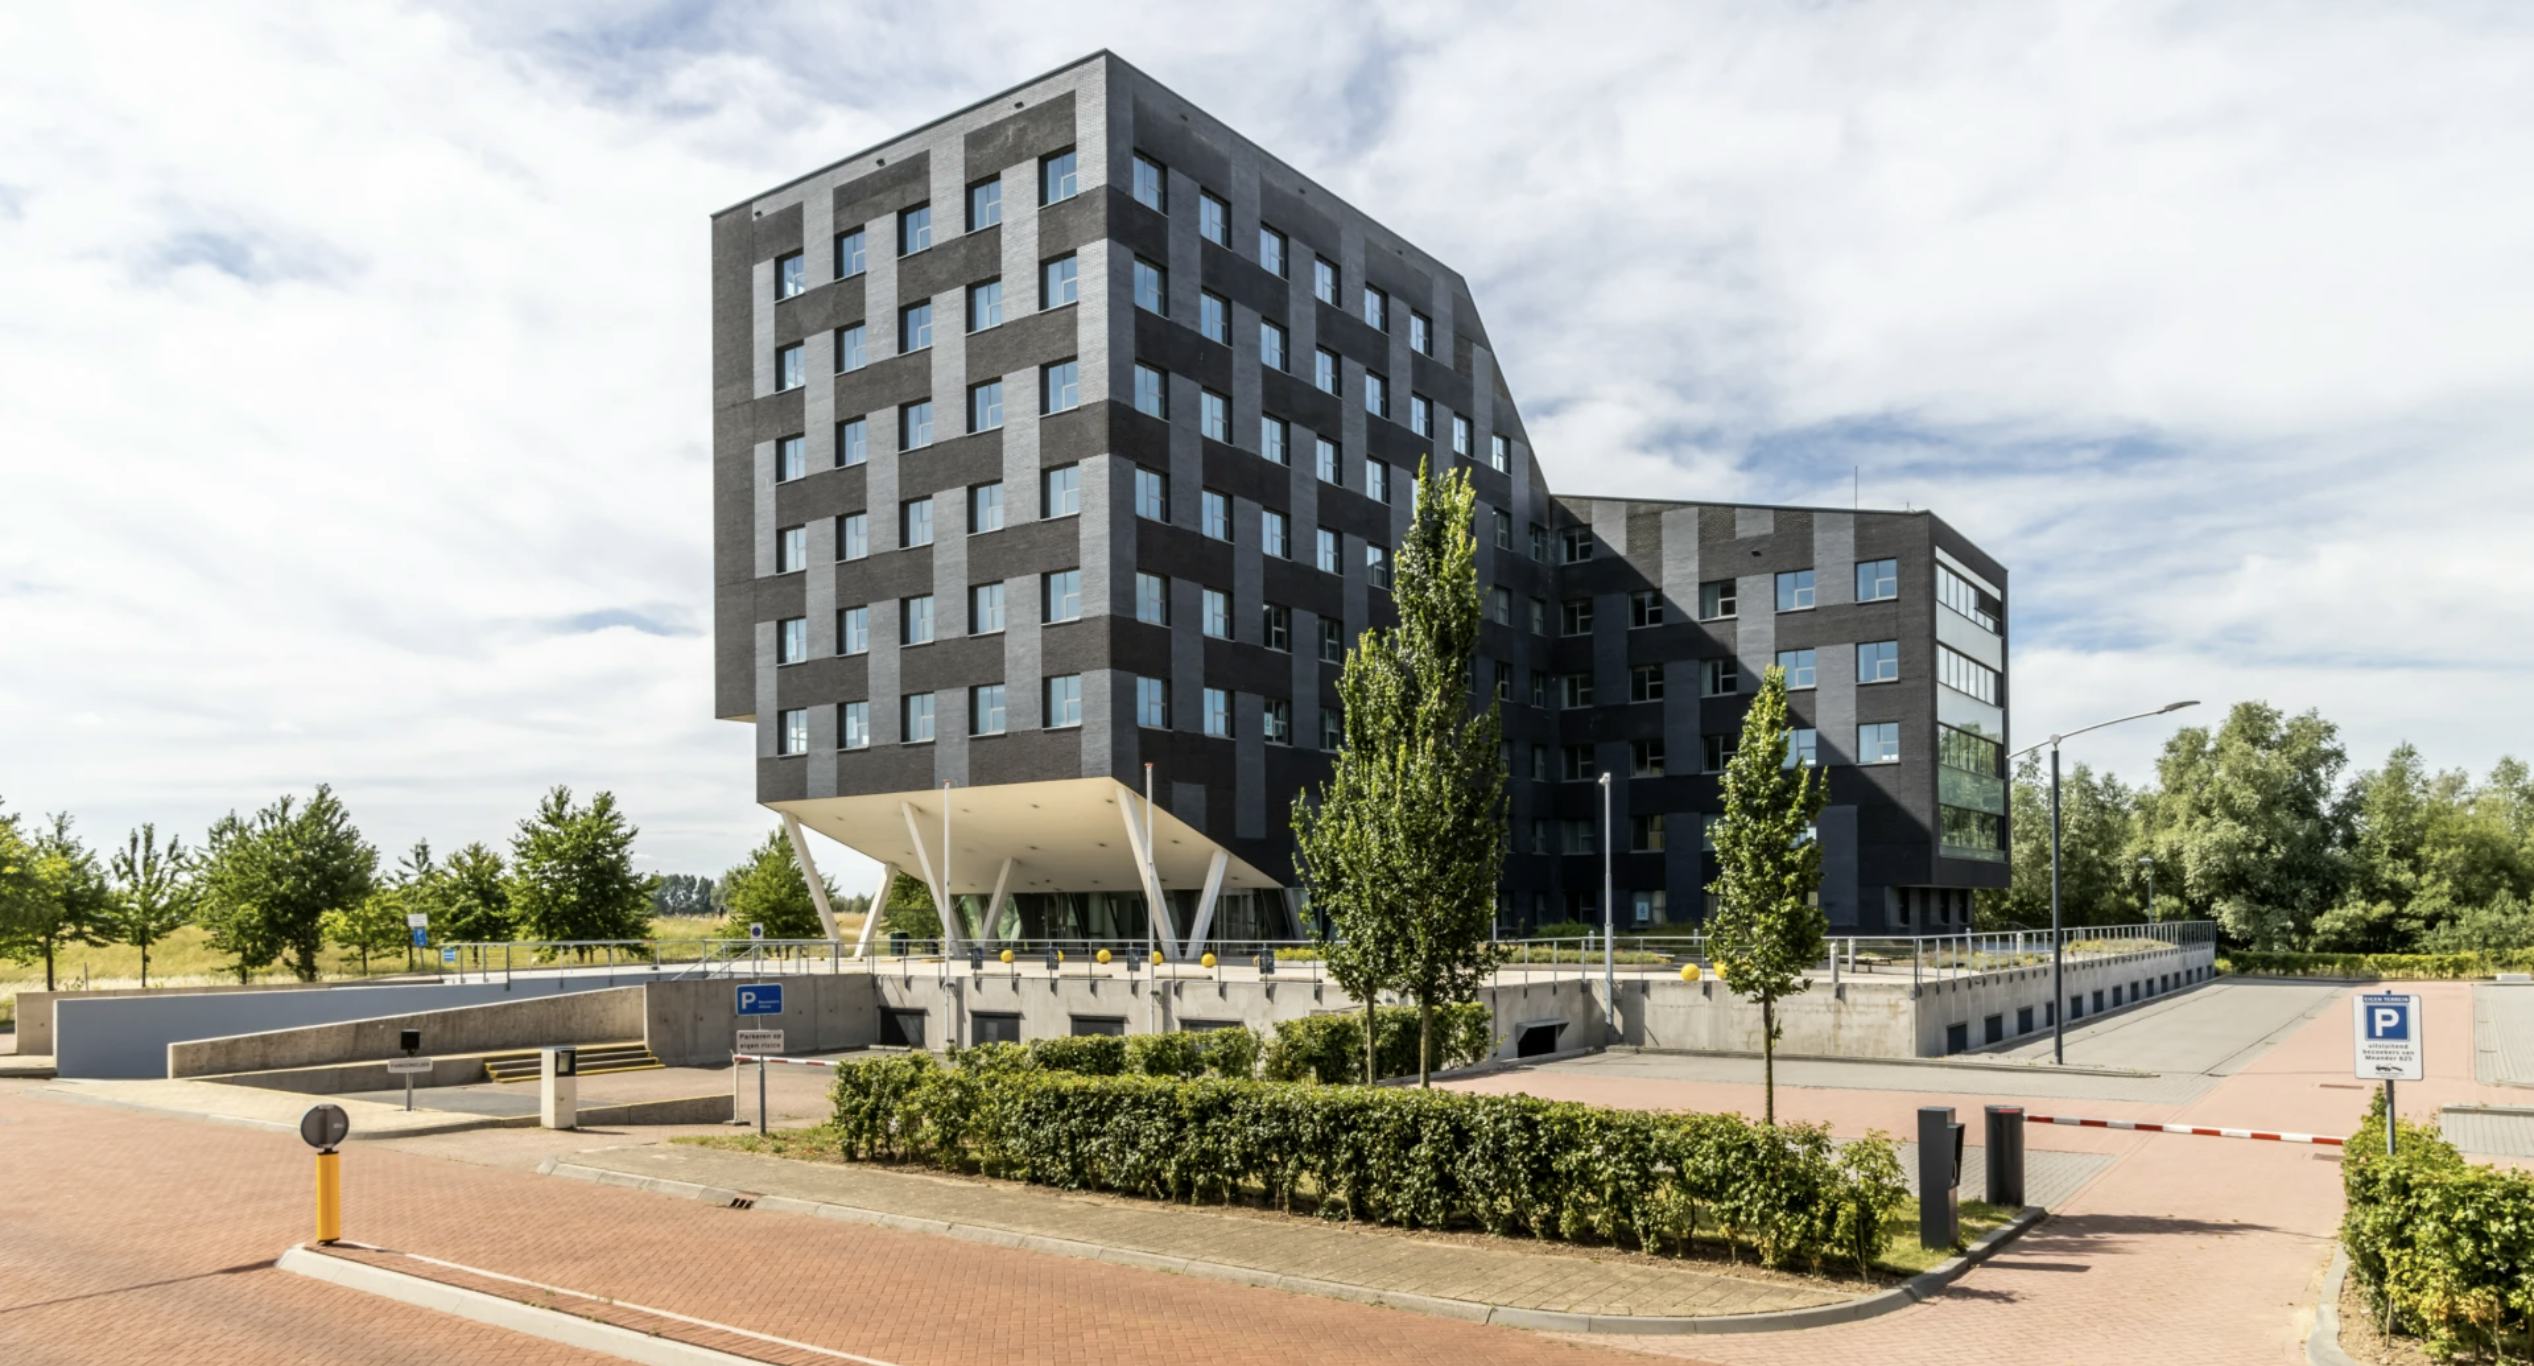 GGZ-praktijk huurt ruim 1.000 m2 in voormalig Vitens-gebouw Arnhem